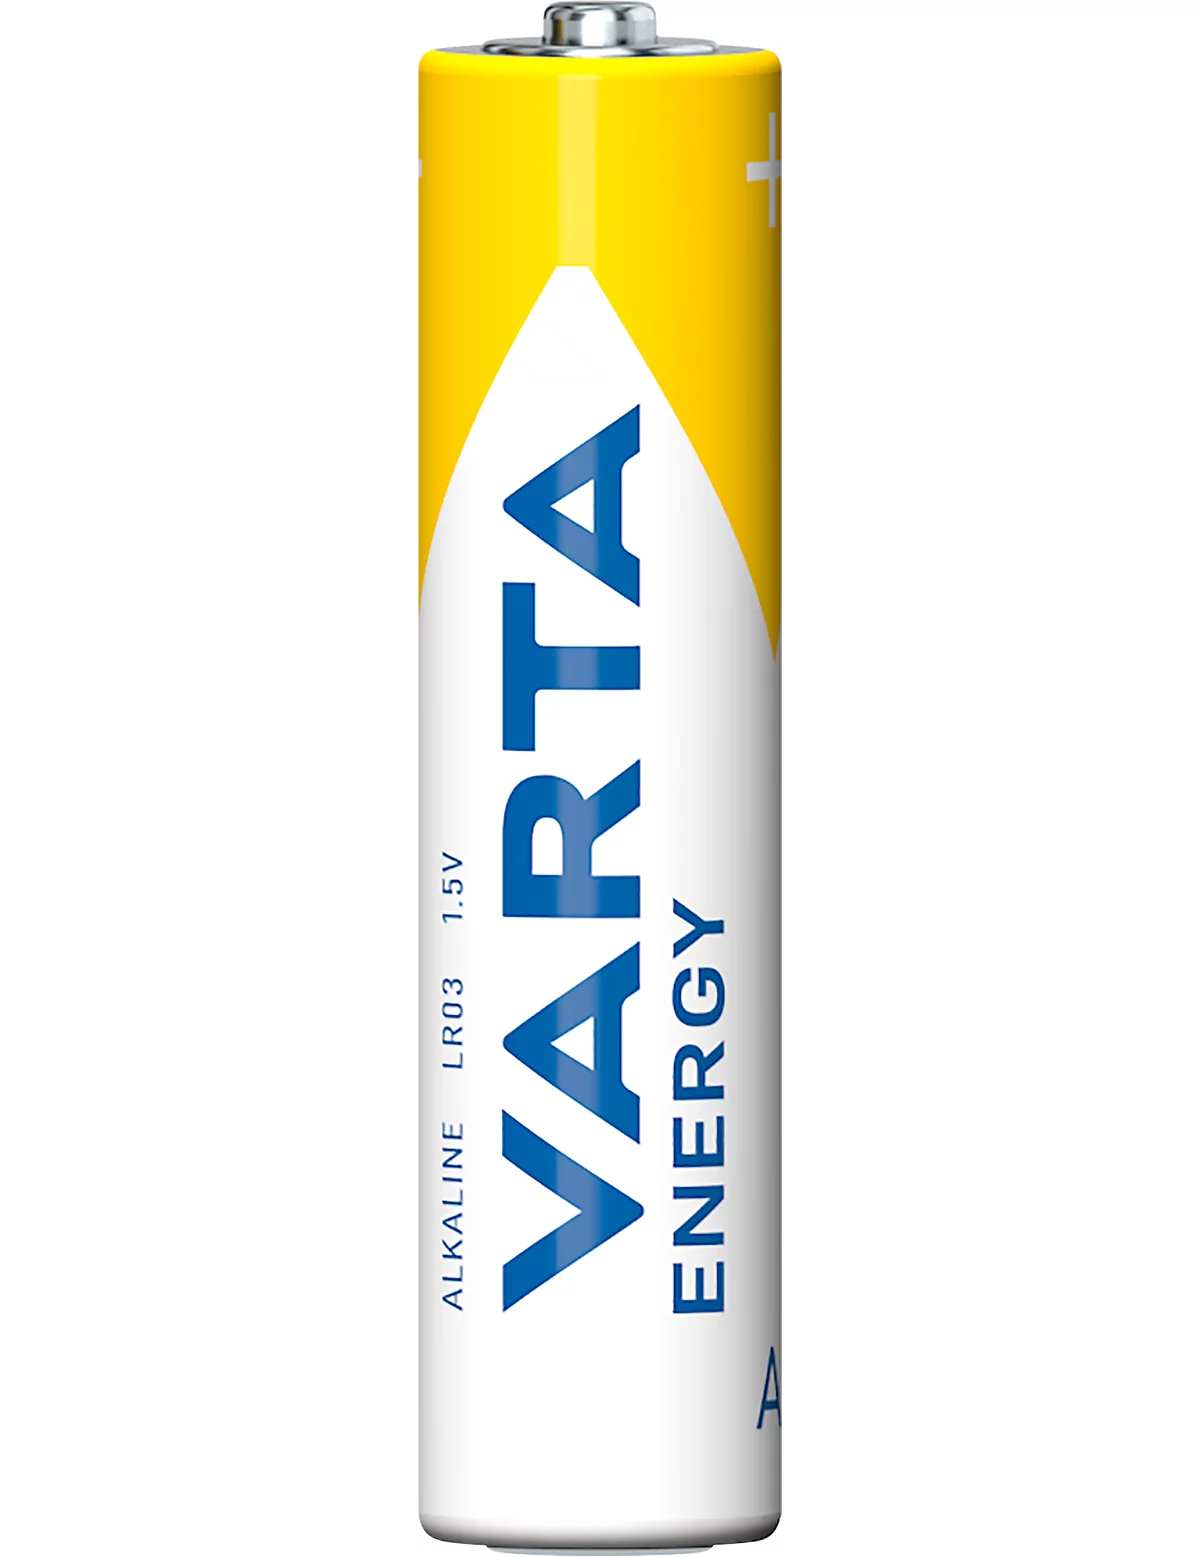 Pilas VARTA Energy, micro AAA, 10 unidades